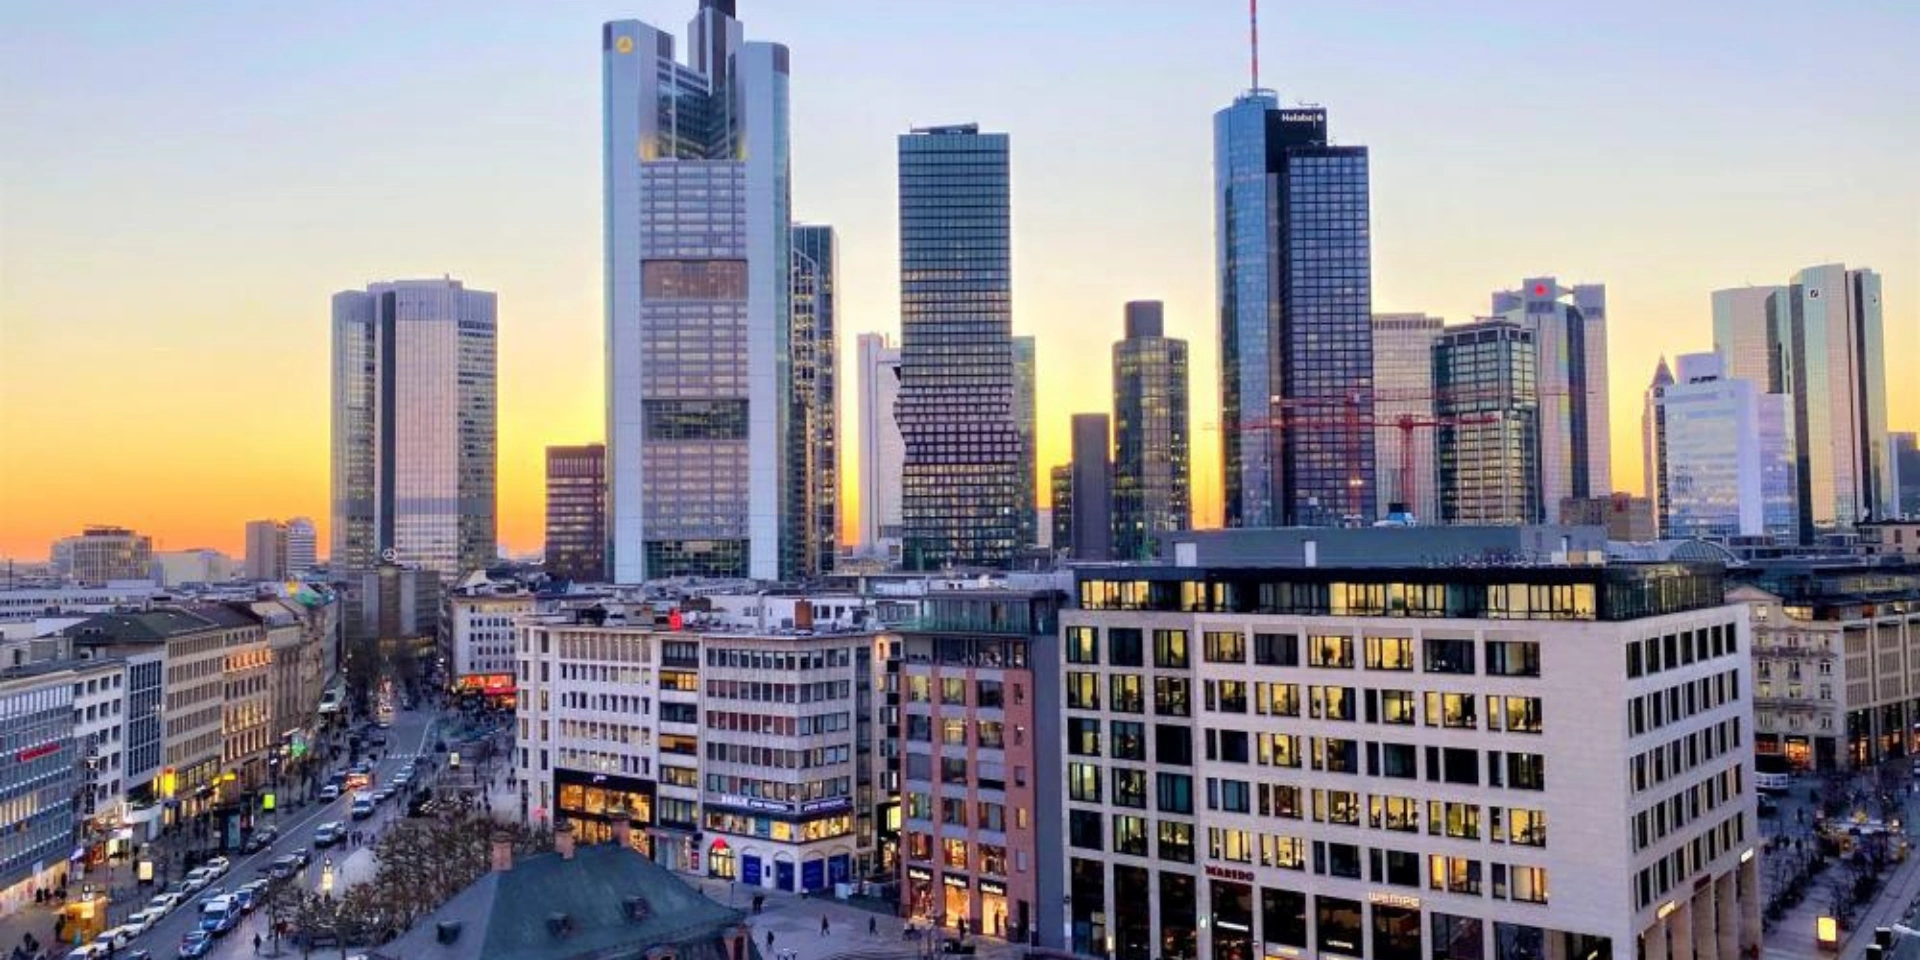 Skyline of Frankfurts universities